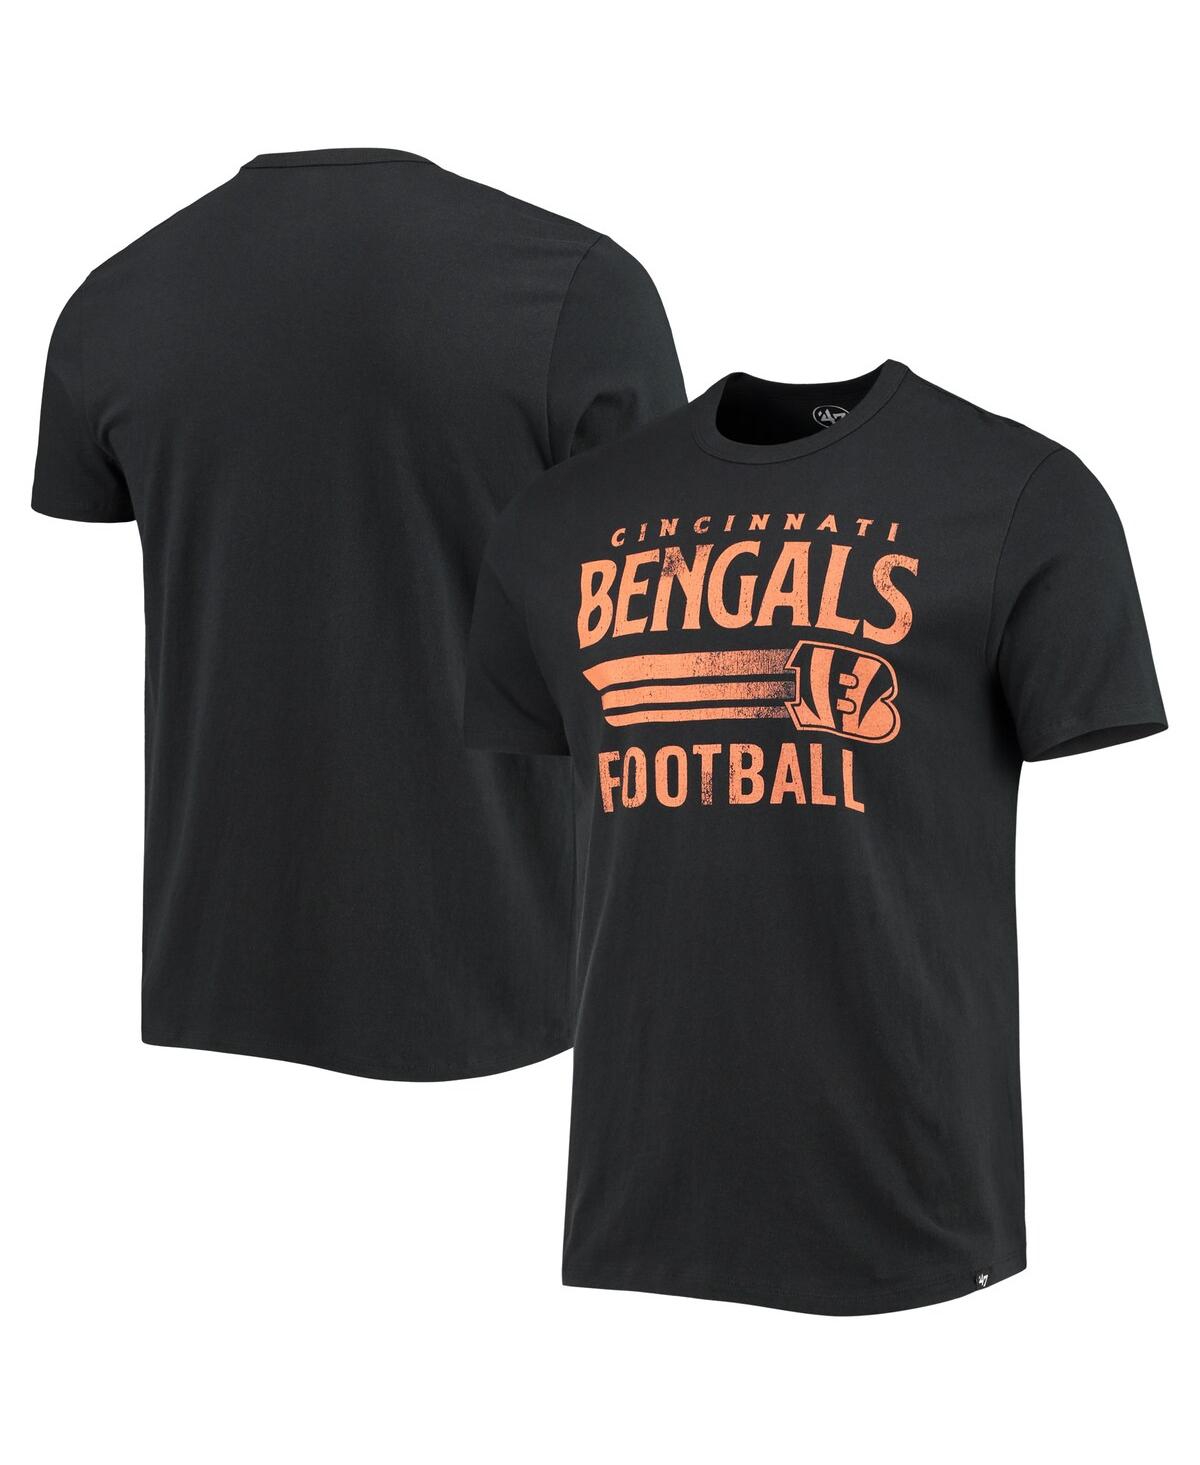 Men's '47 Brand Black Cincinnati Bengals Conrider Franklin T-shirt - Black